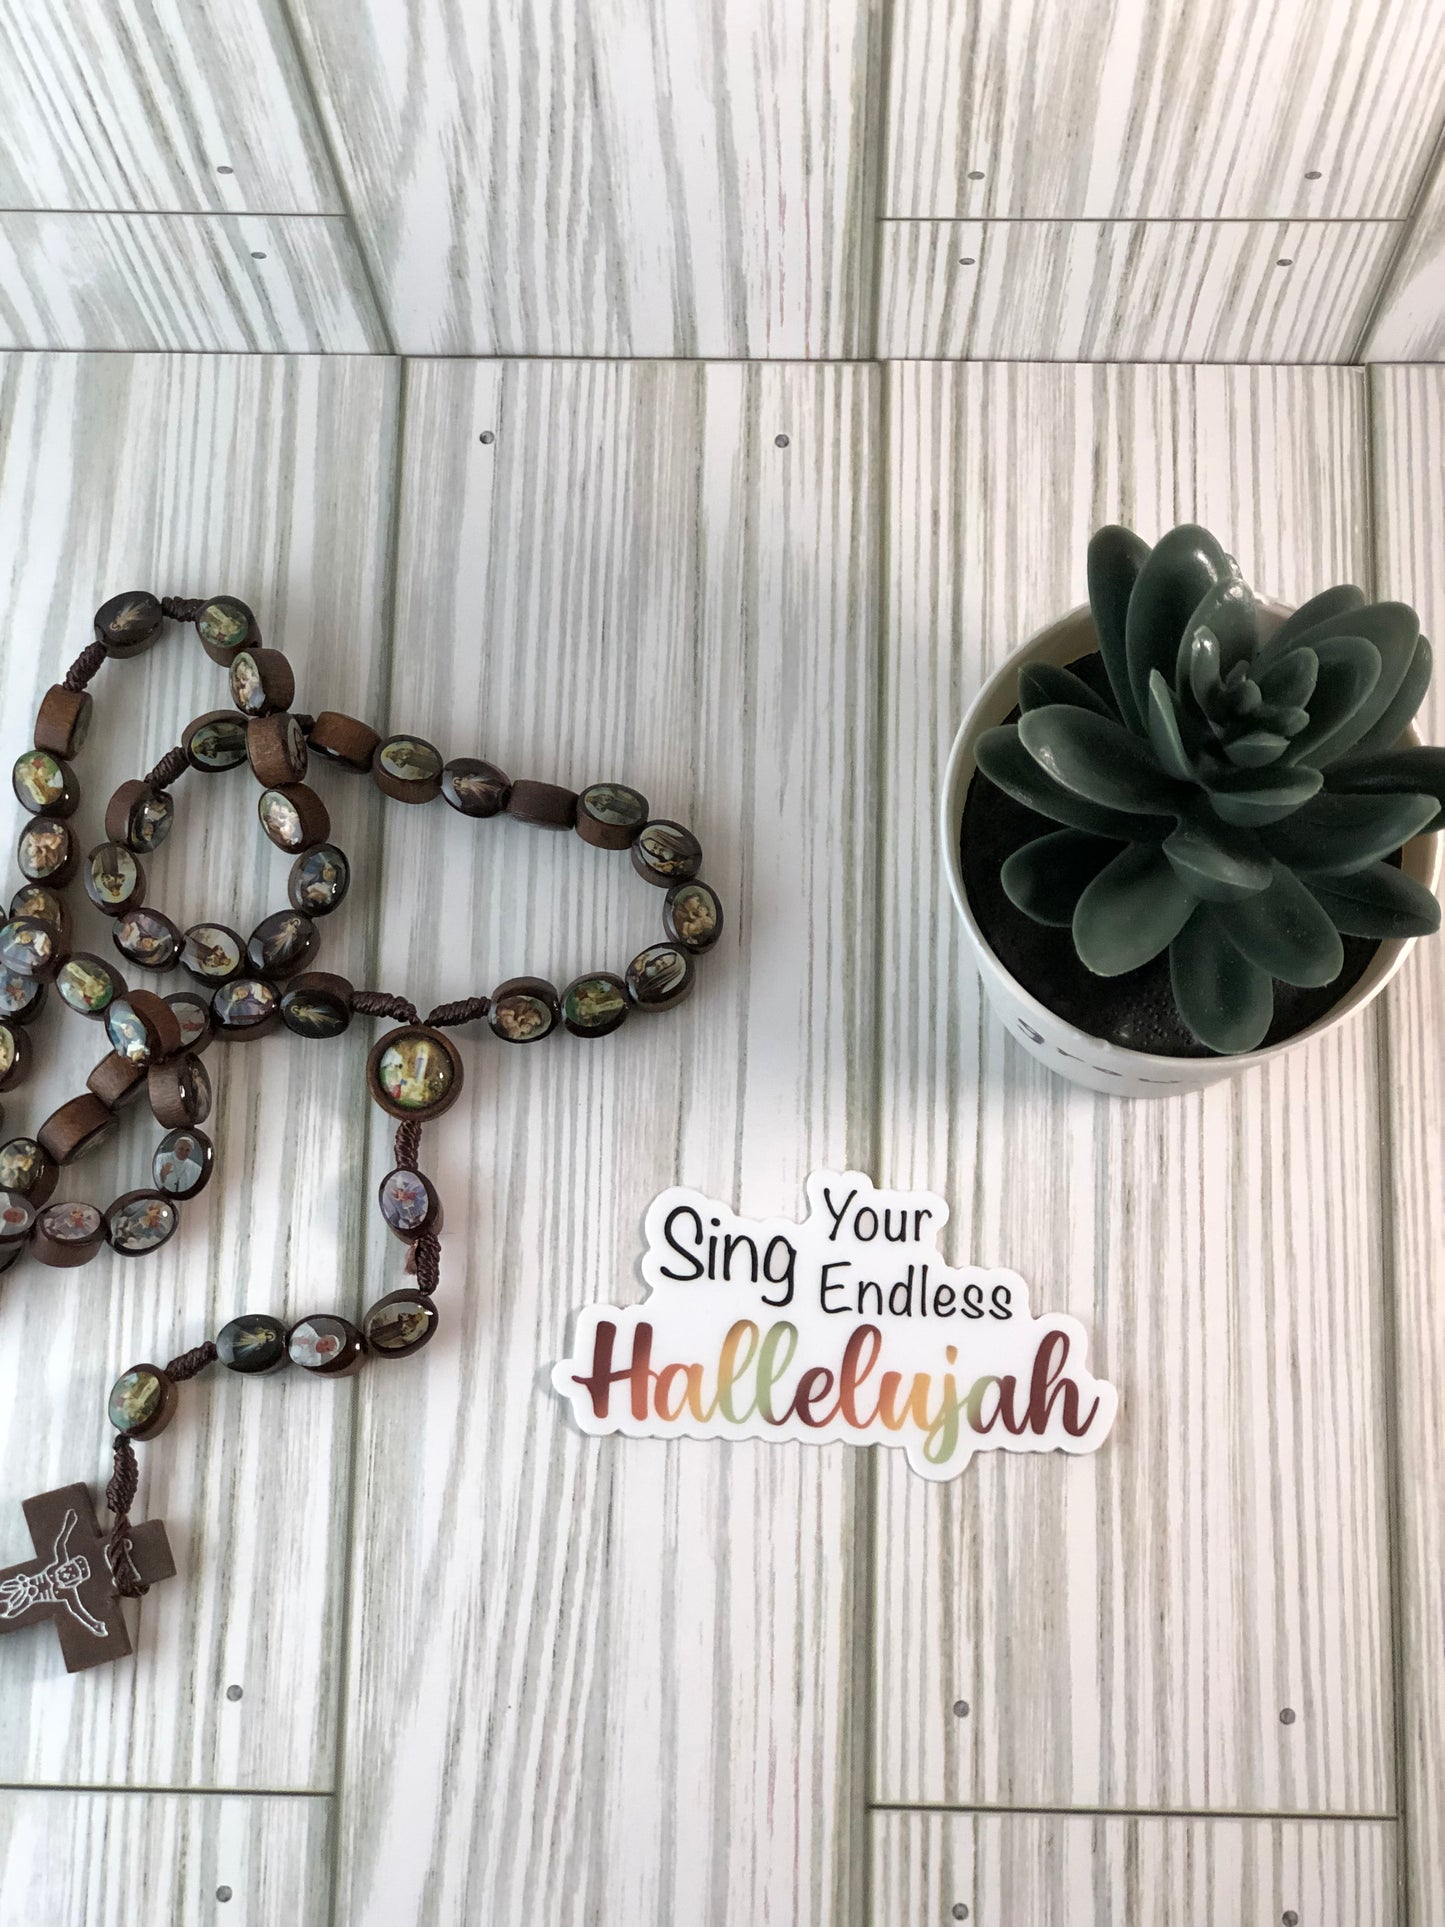 Sing Your Endless Hallelujah